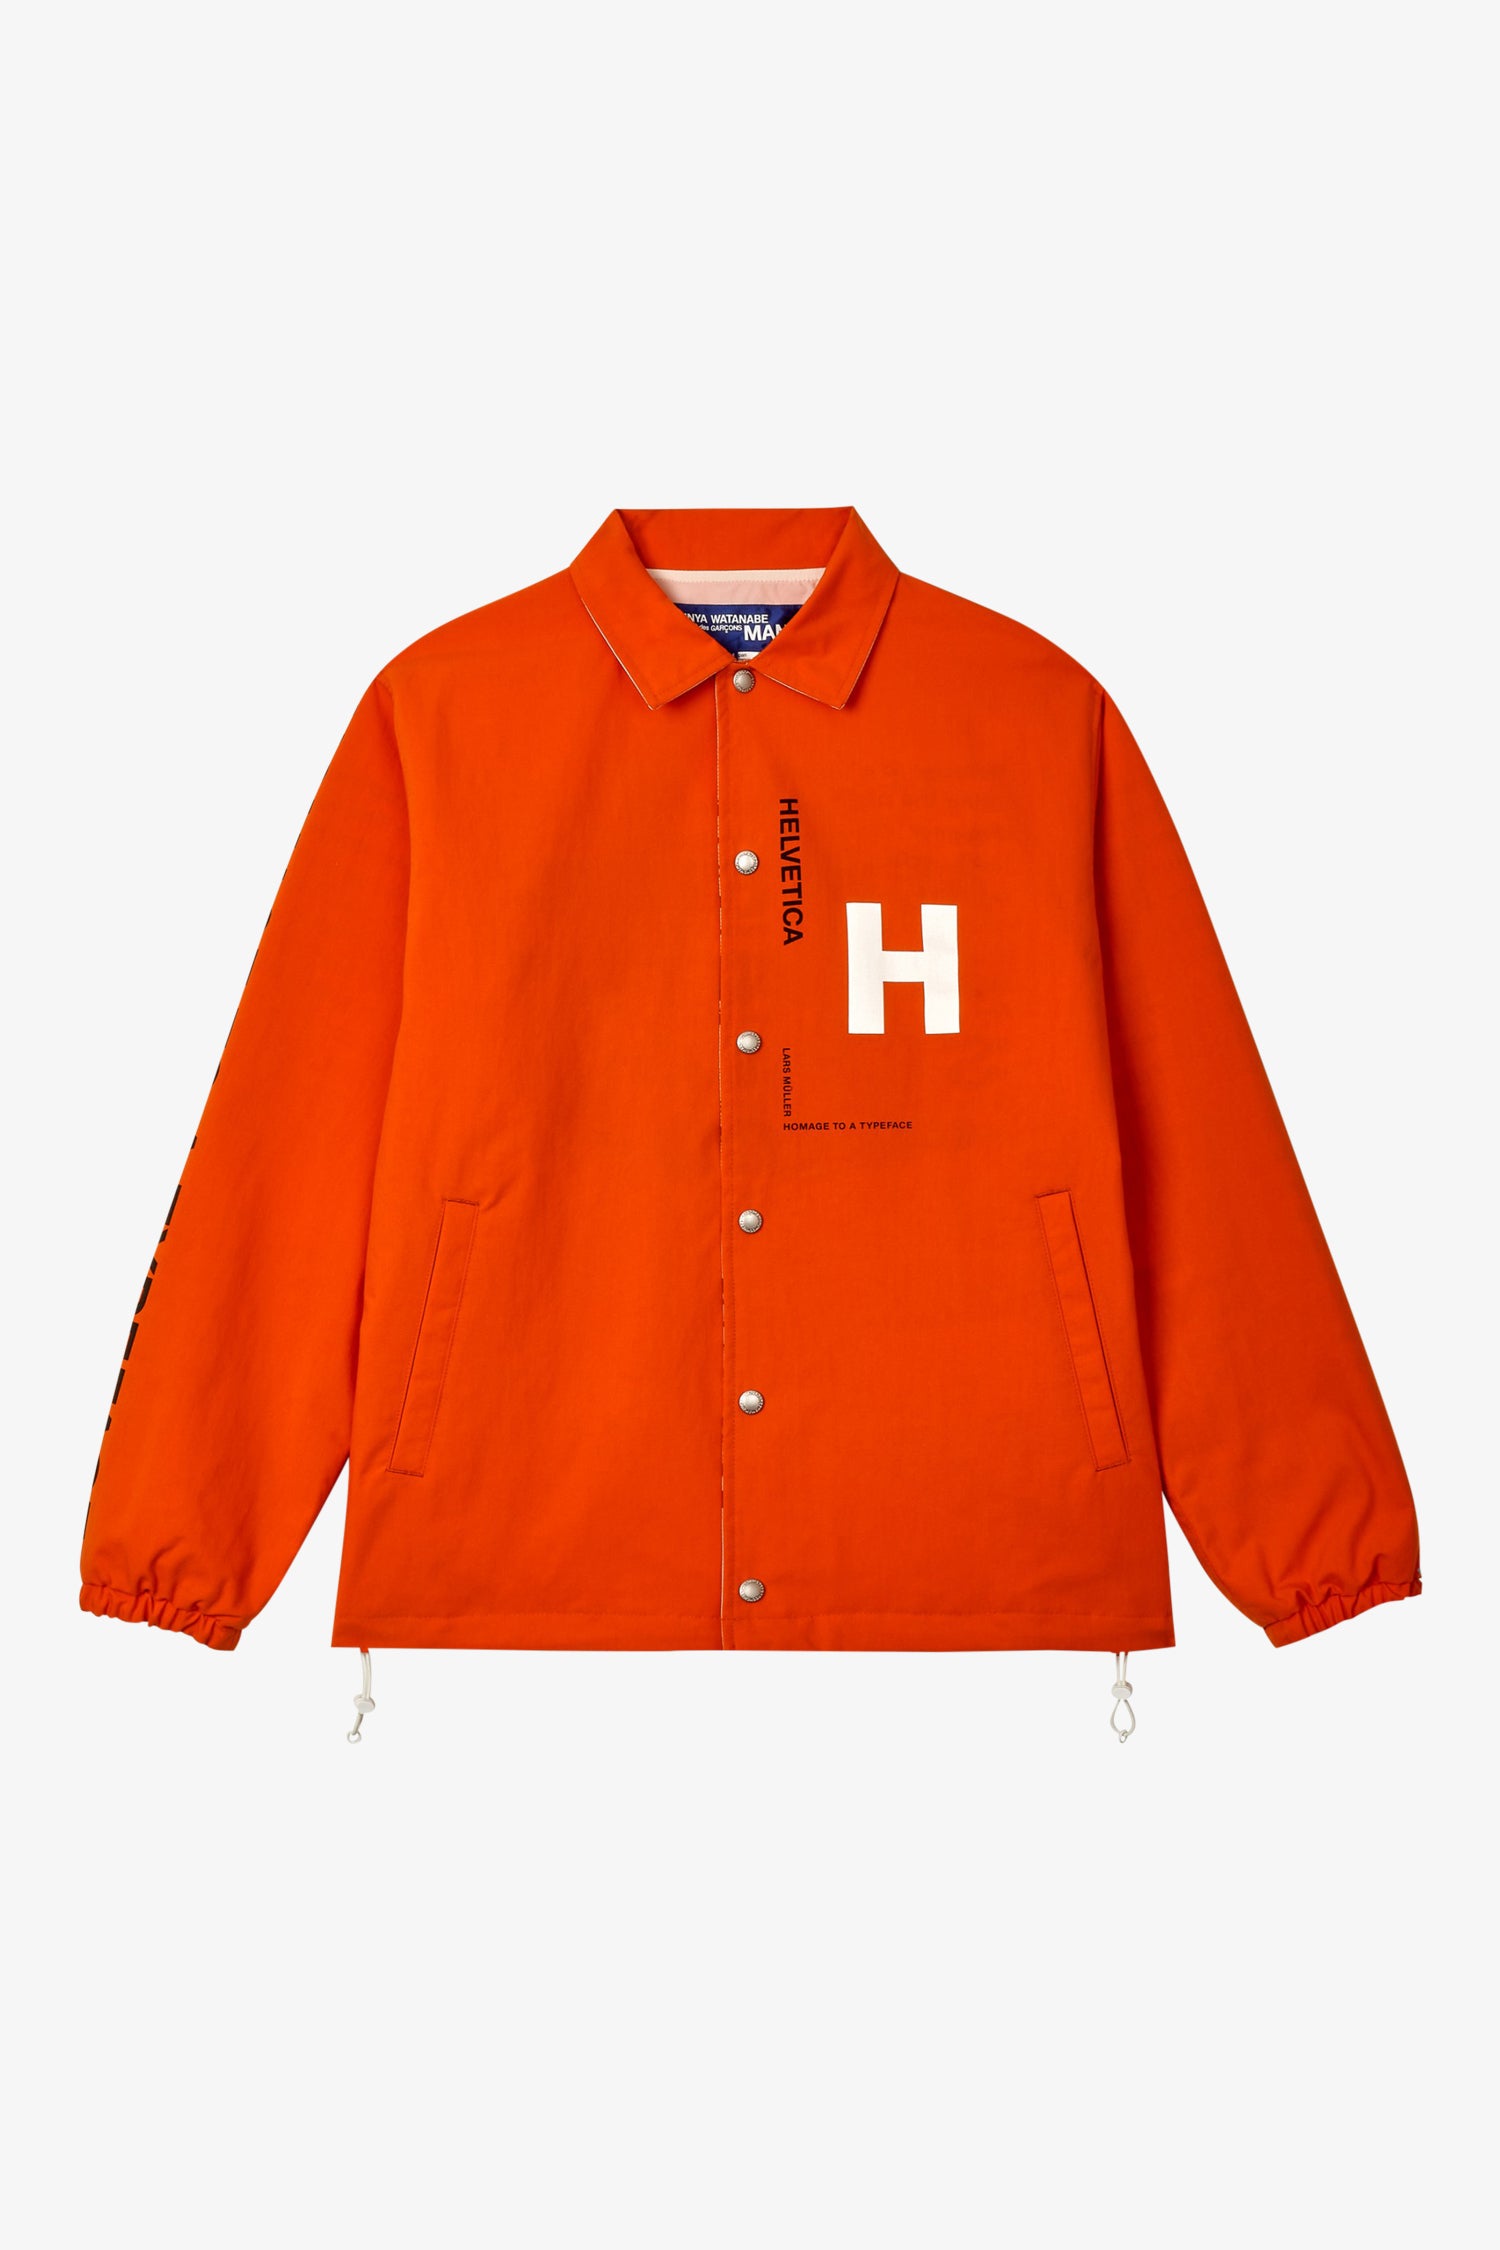 Selectshop FRAME - JUNYA WATANABE MAN Helvetica Jacket Outerwear Dubai